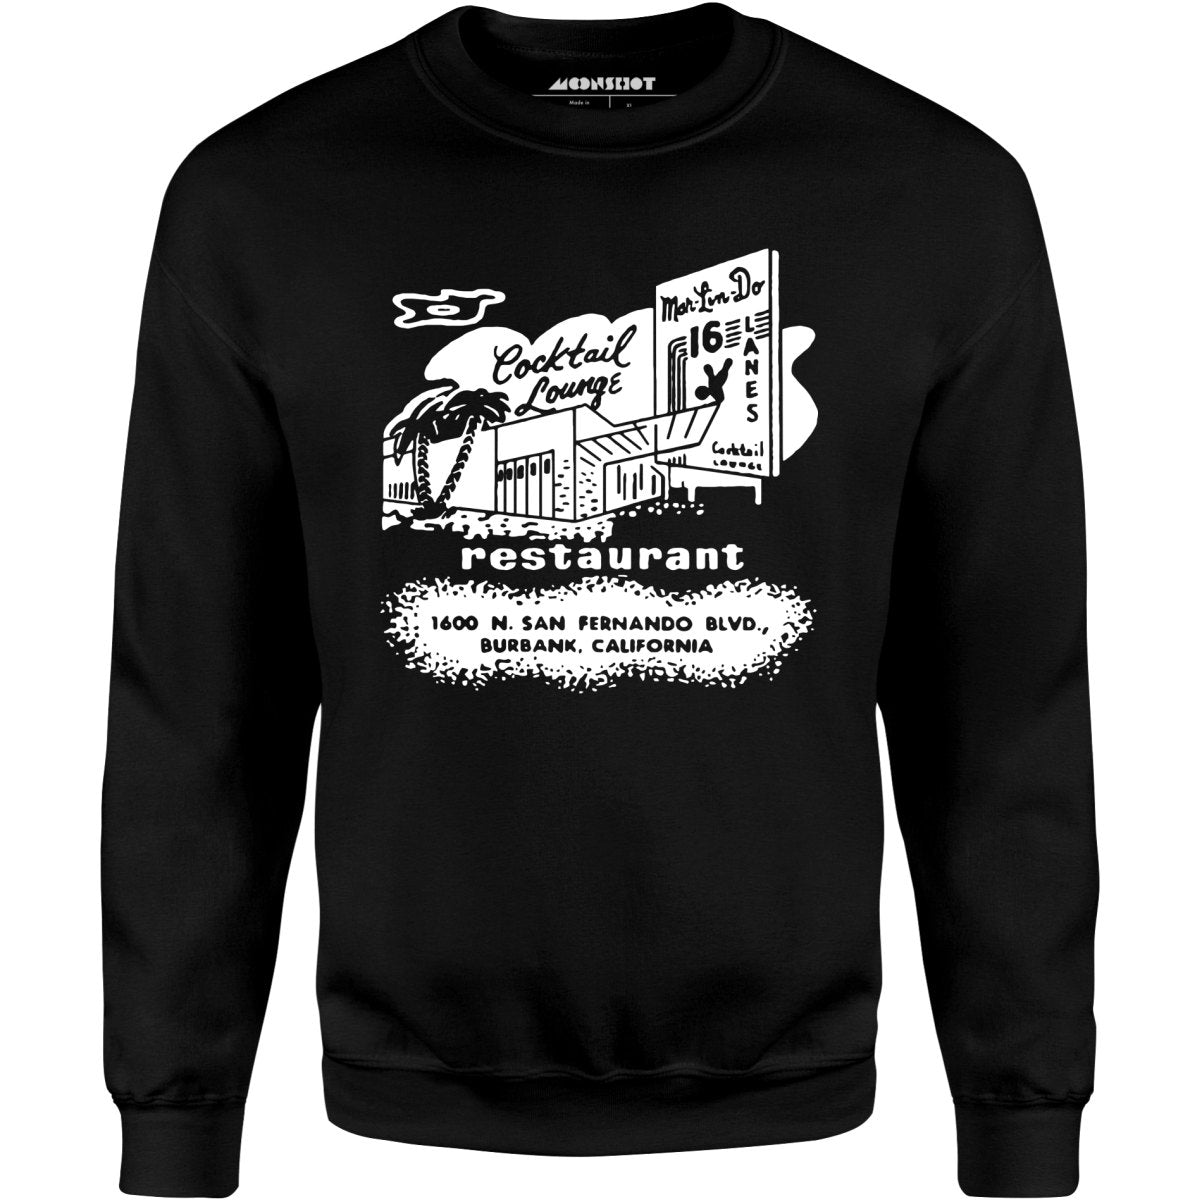 Mar-Lin-Do Lanes - Burbank, CA - Vintage Bowling Alley - Unisex Sweatshirt